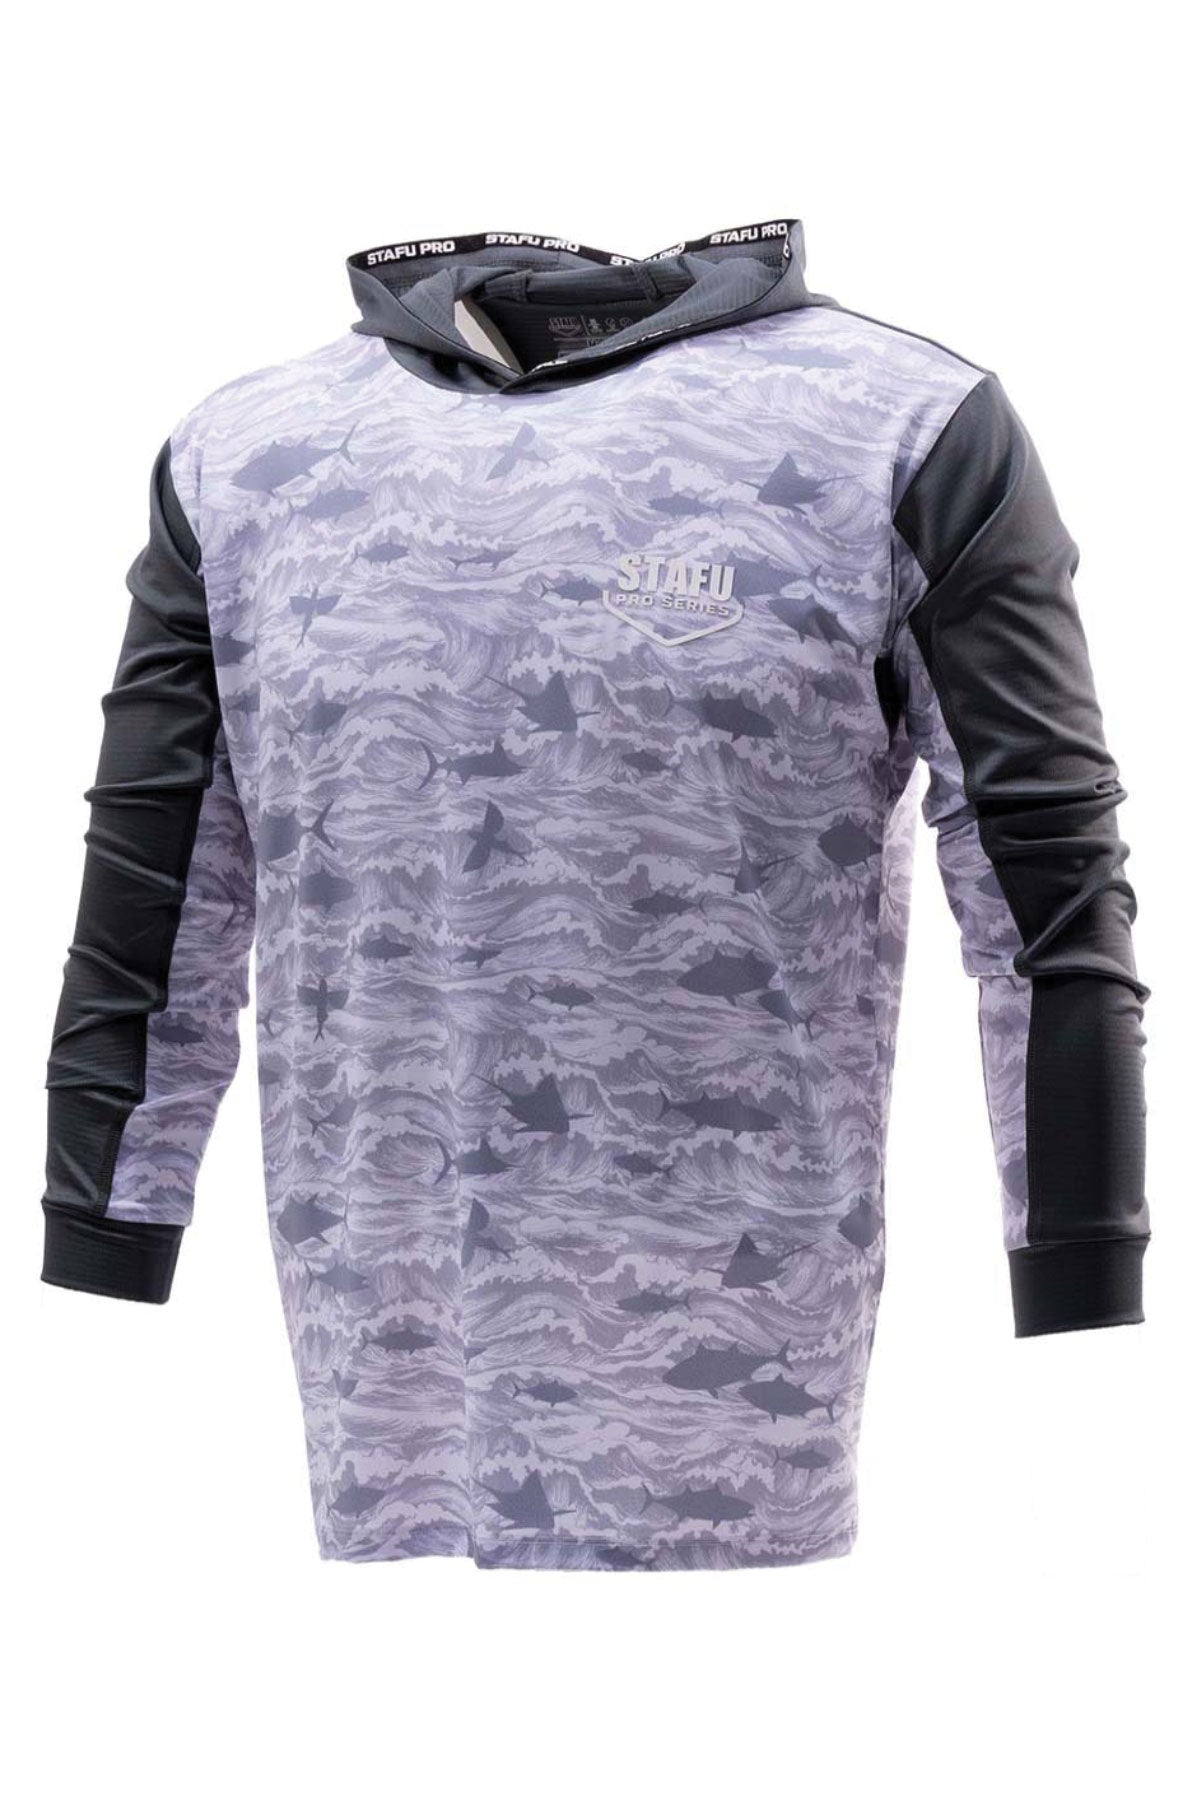 Outrigger Hooded Long Sleeve Fishing Shirt - Signature - White - Stafu Pro Series